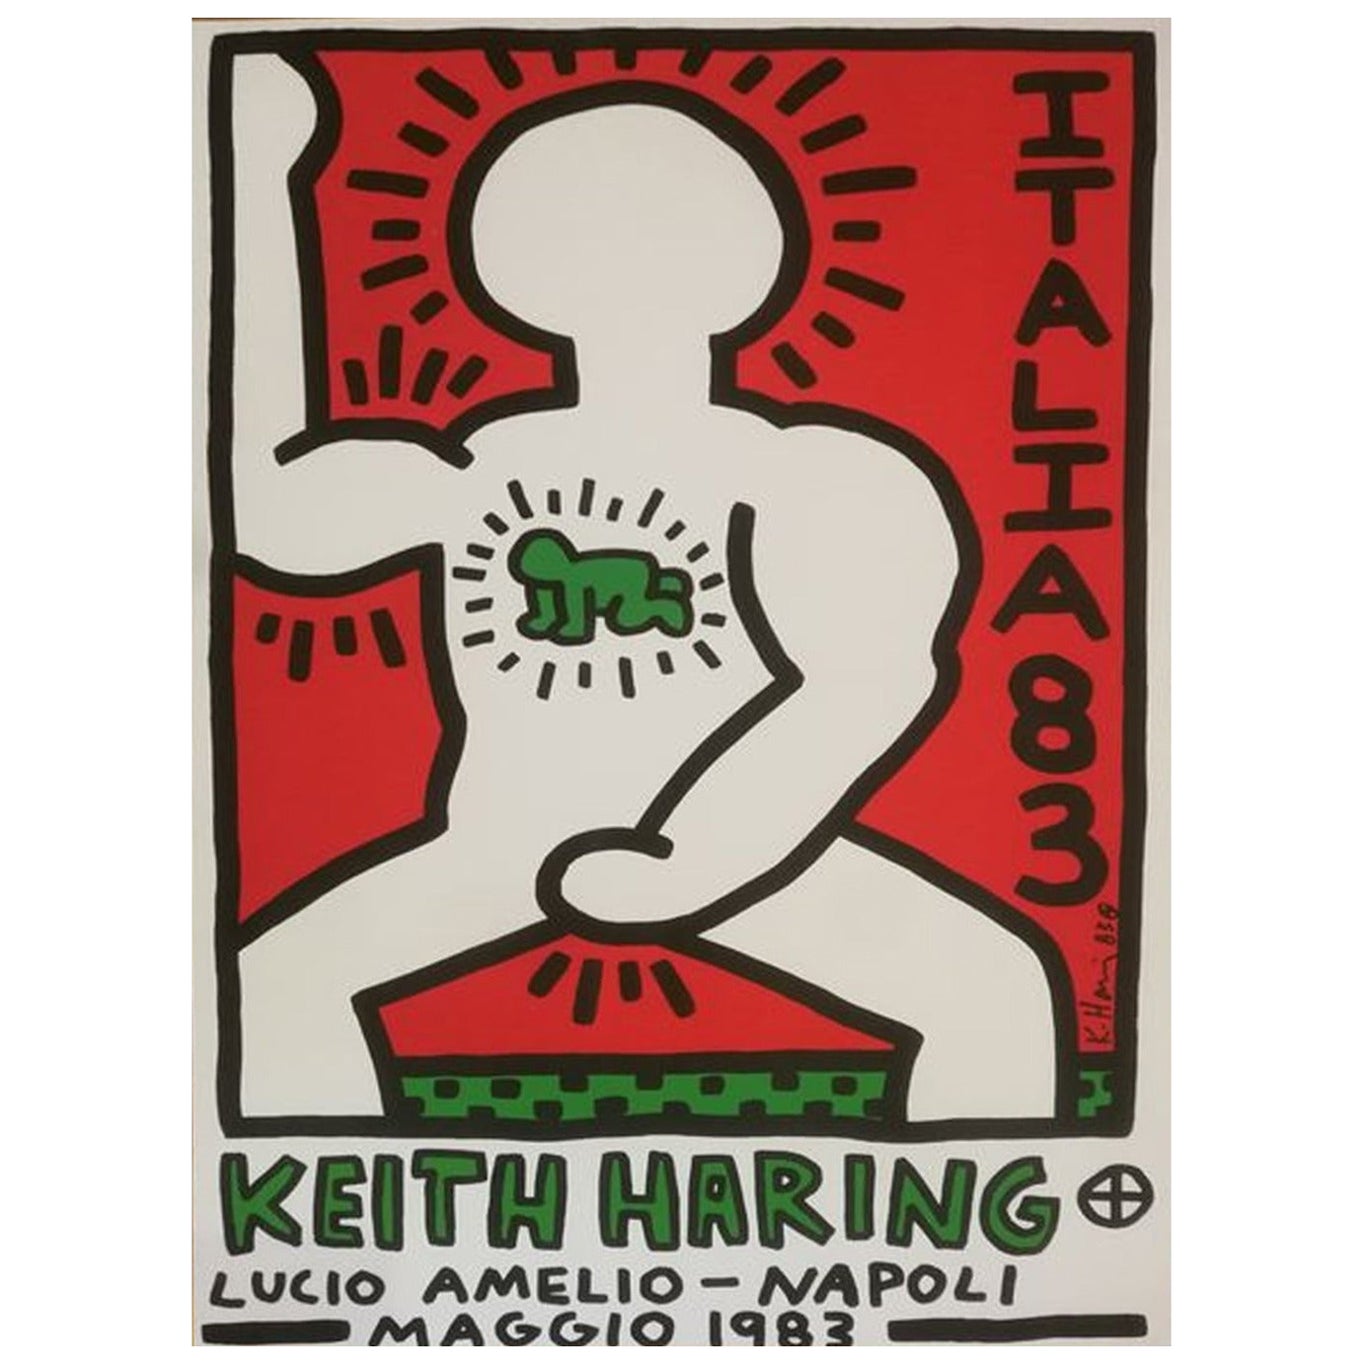 1983 Keith Haring, Lucio Amelio Napoli, Original-Vintage-Poster im Angebot